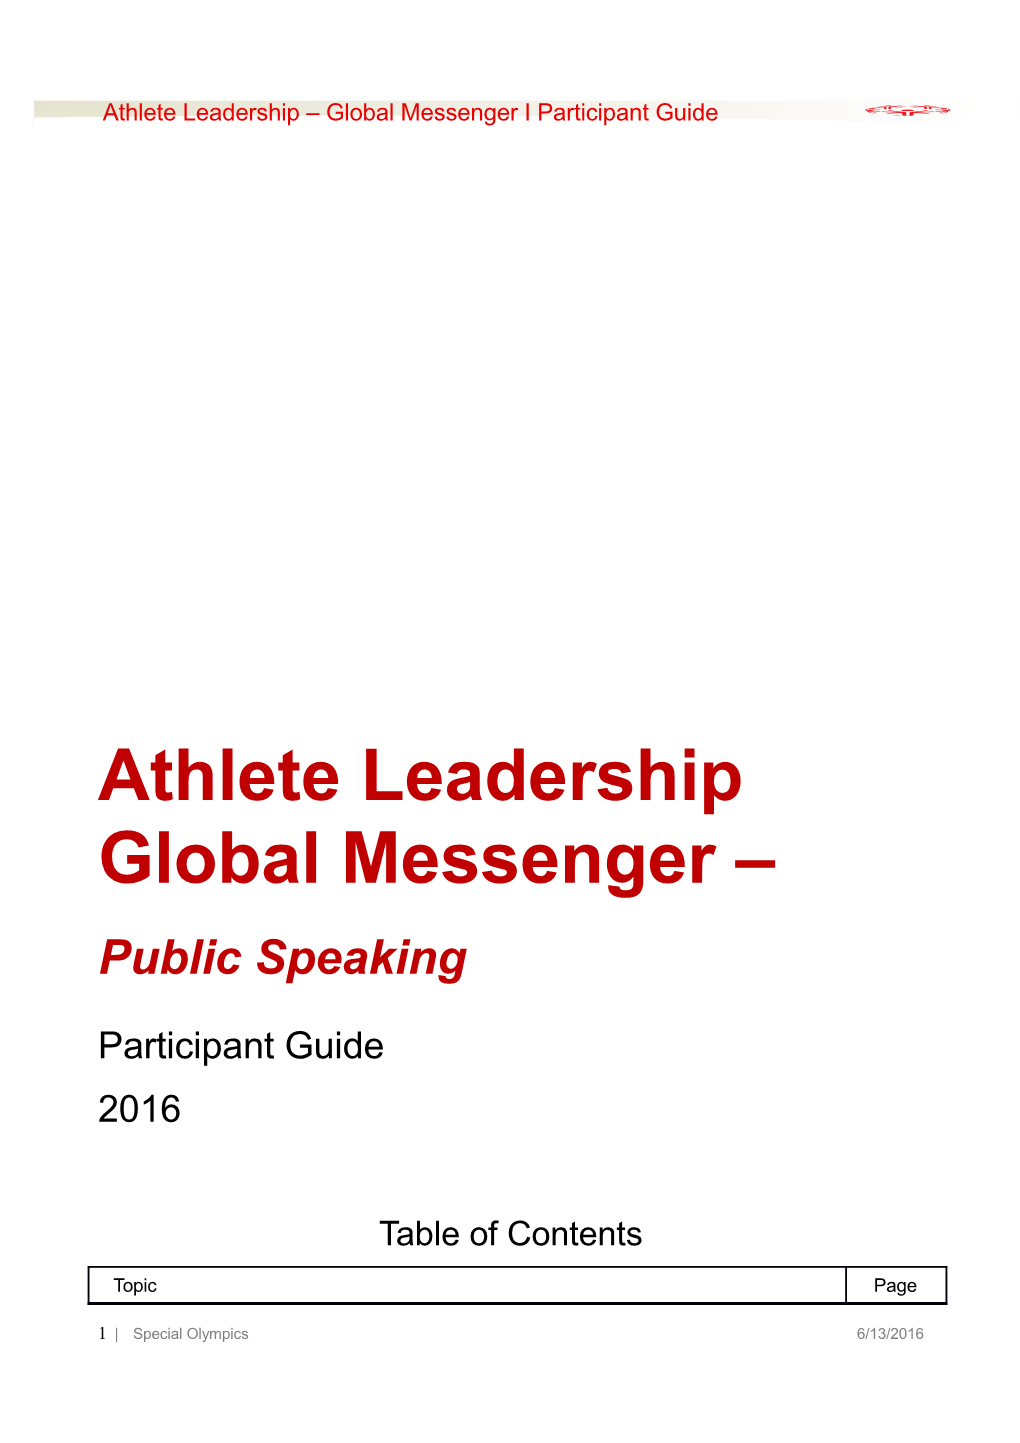 Athlete Leadership Global Messenger I Participant Guide